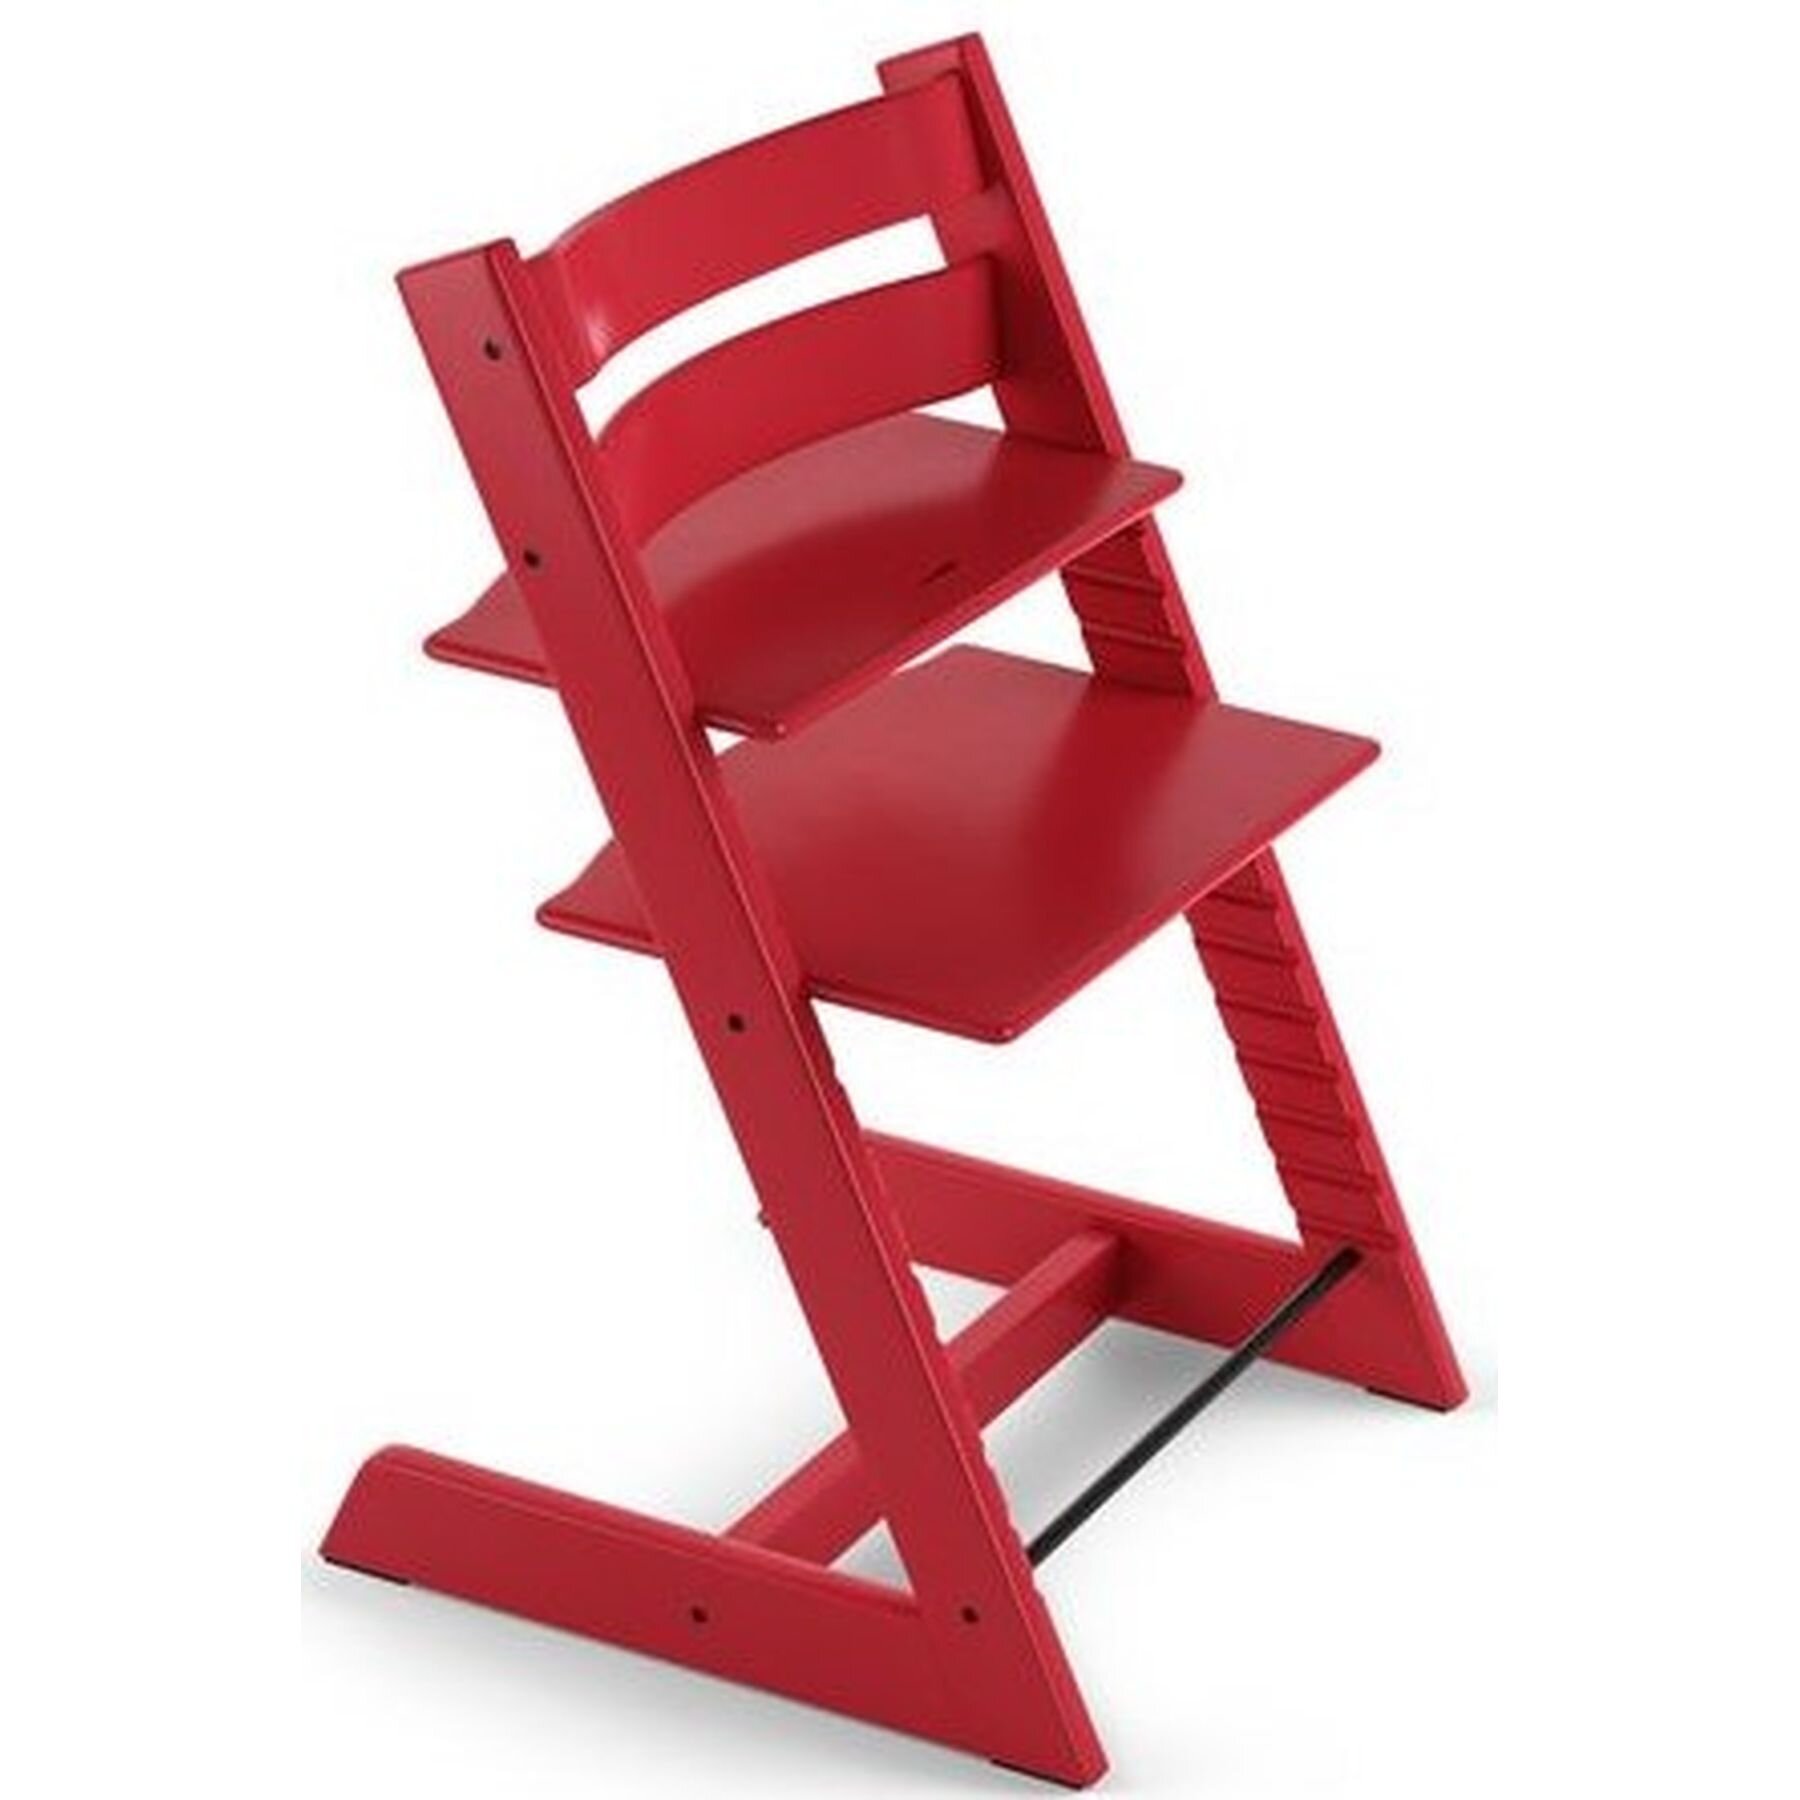 Stokke Tripp Trapp Highchair- Red - NURSERY-Furniture : Kid Republic